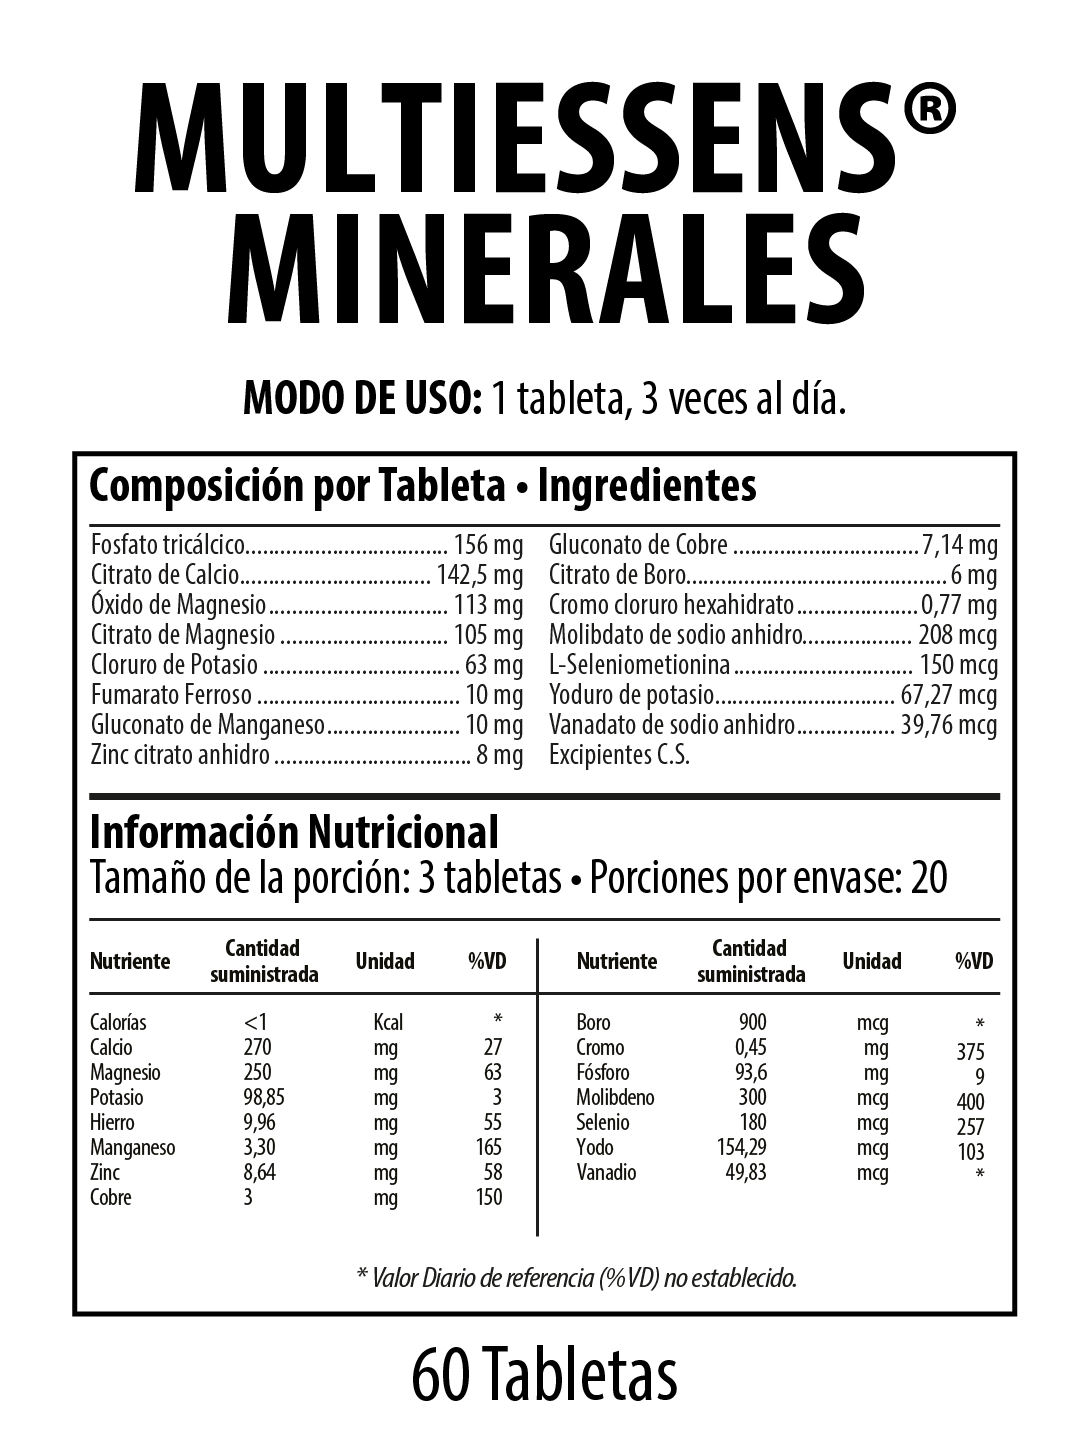 Multiessens Mineral Suplemento Dietario 60 Tabletas NUTRABIOTICS® - LASKIN